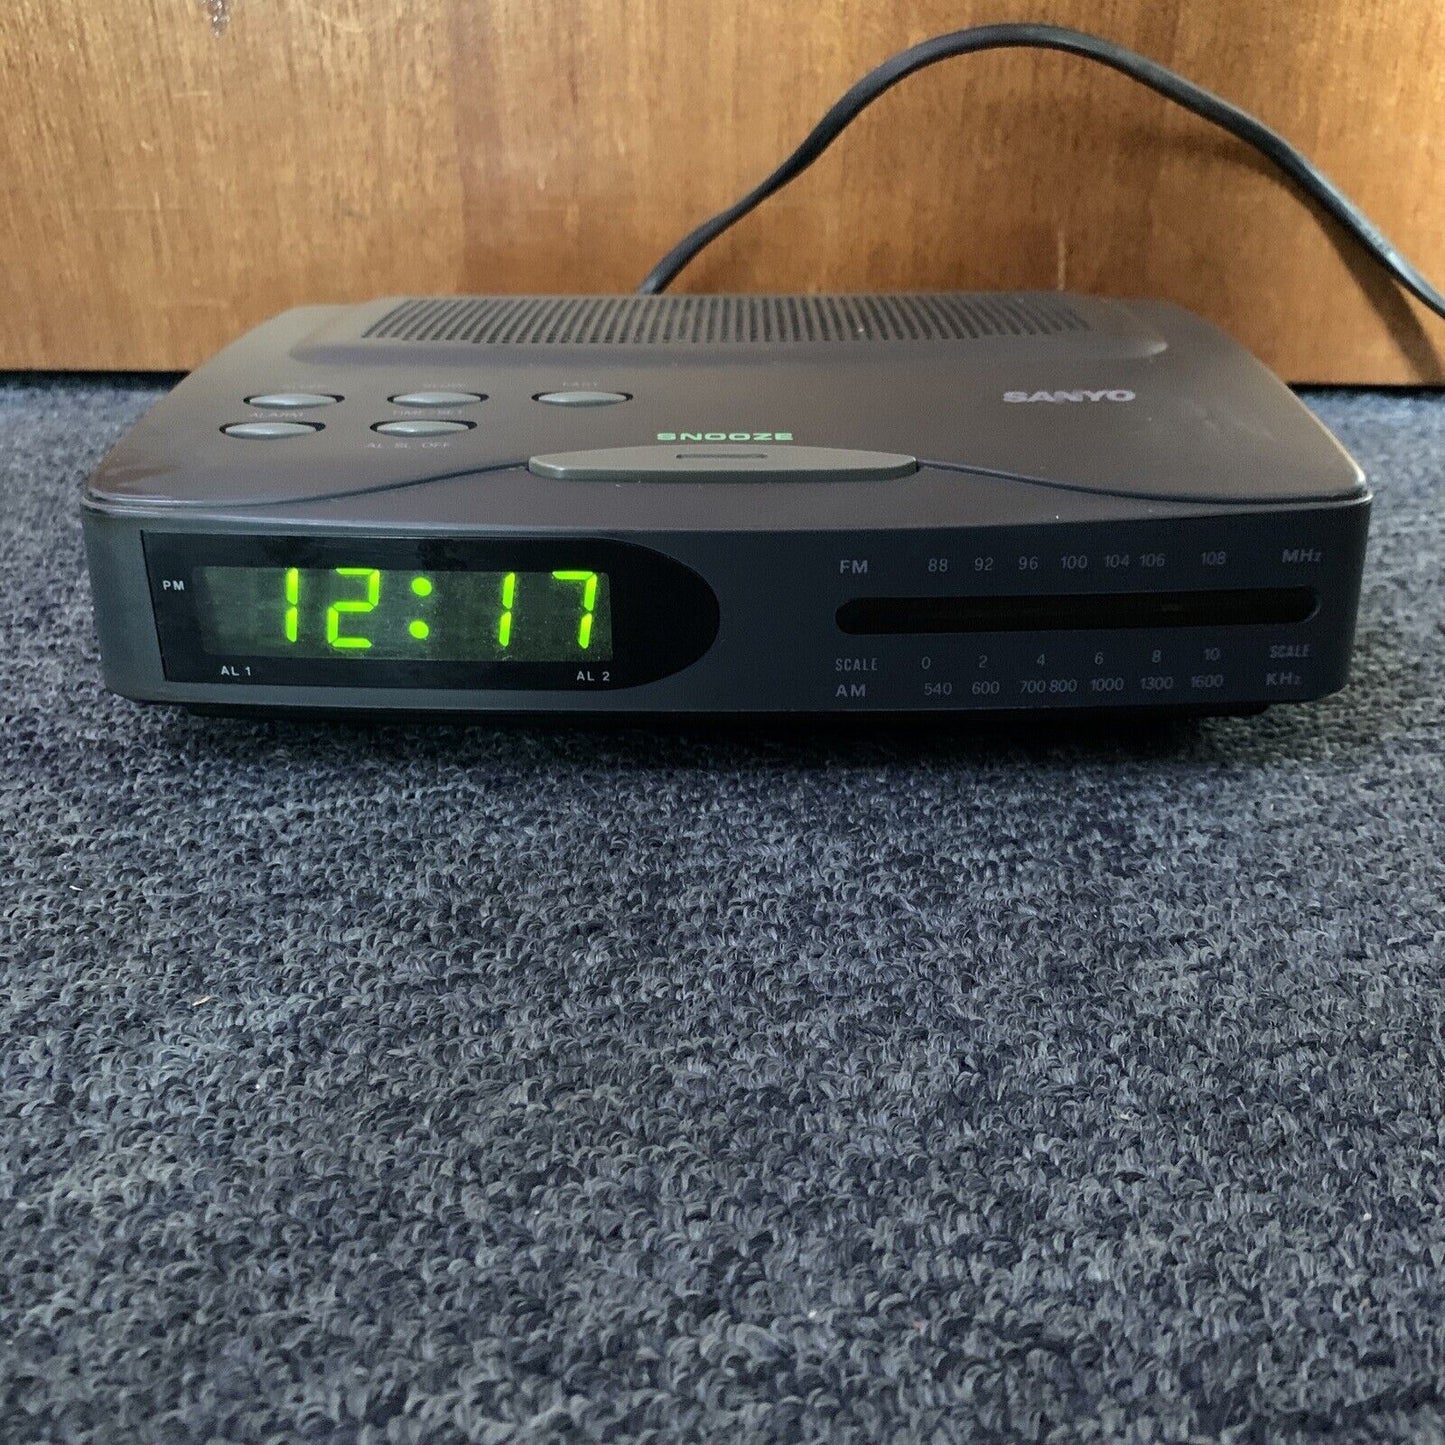 Sanyo RM6022 Alarm Clock AM/FM Radio with Snooze Function